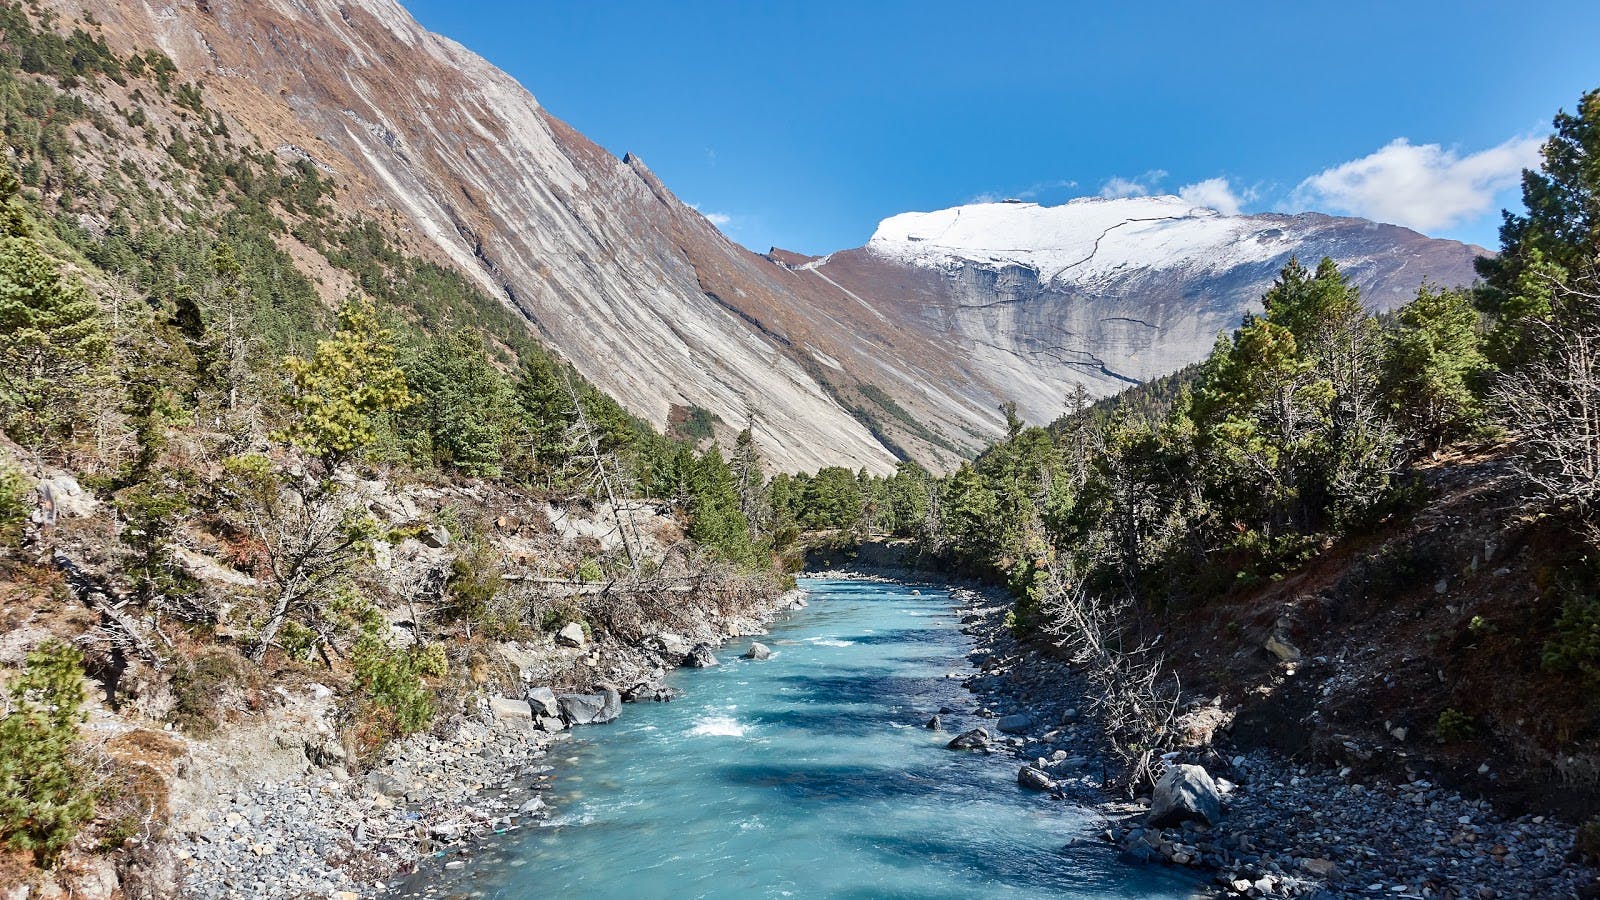 Image - Annapurna Conservation Area